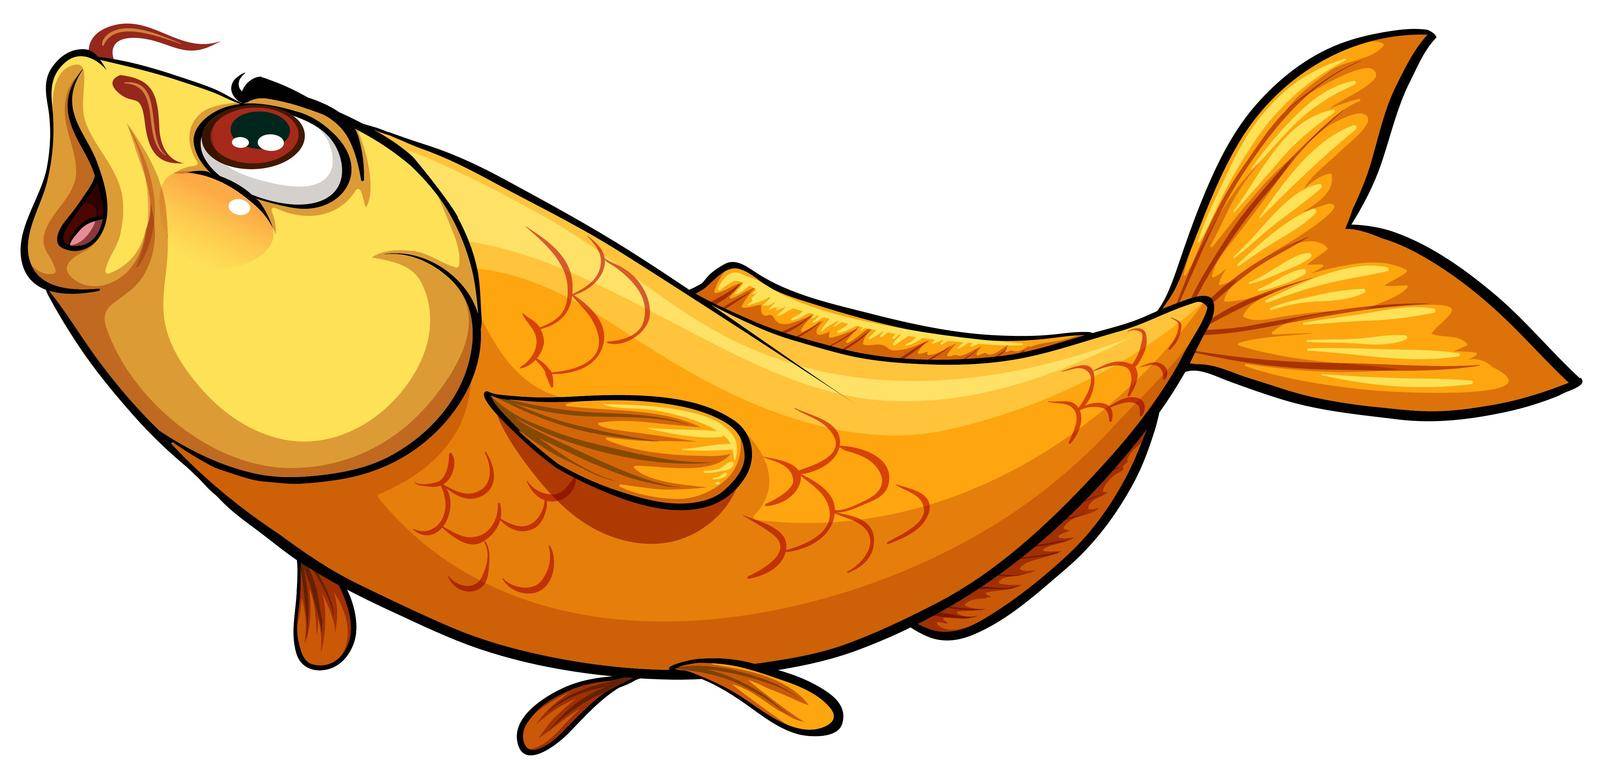 Yellow big fish by iimages